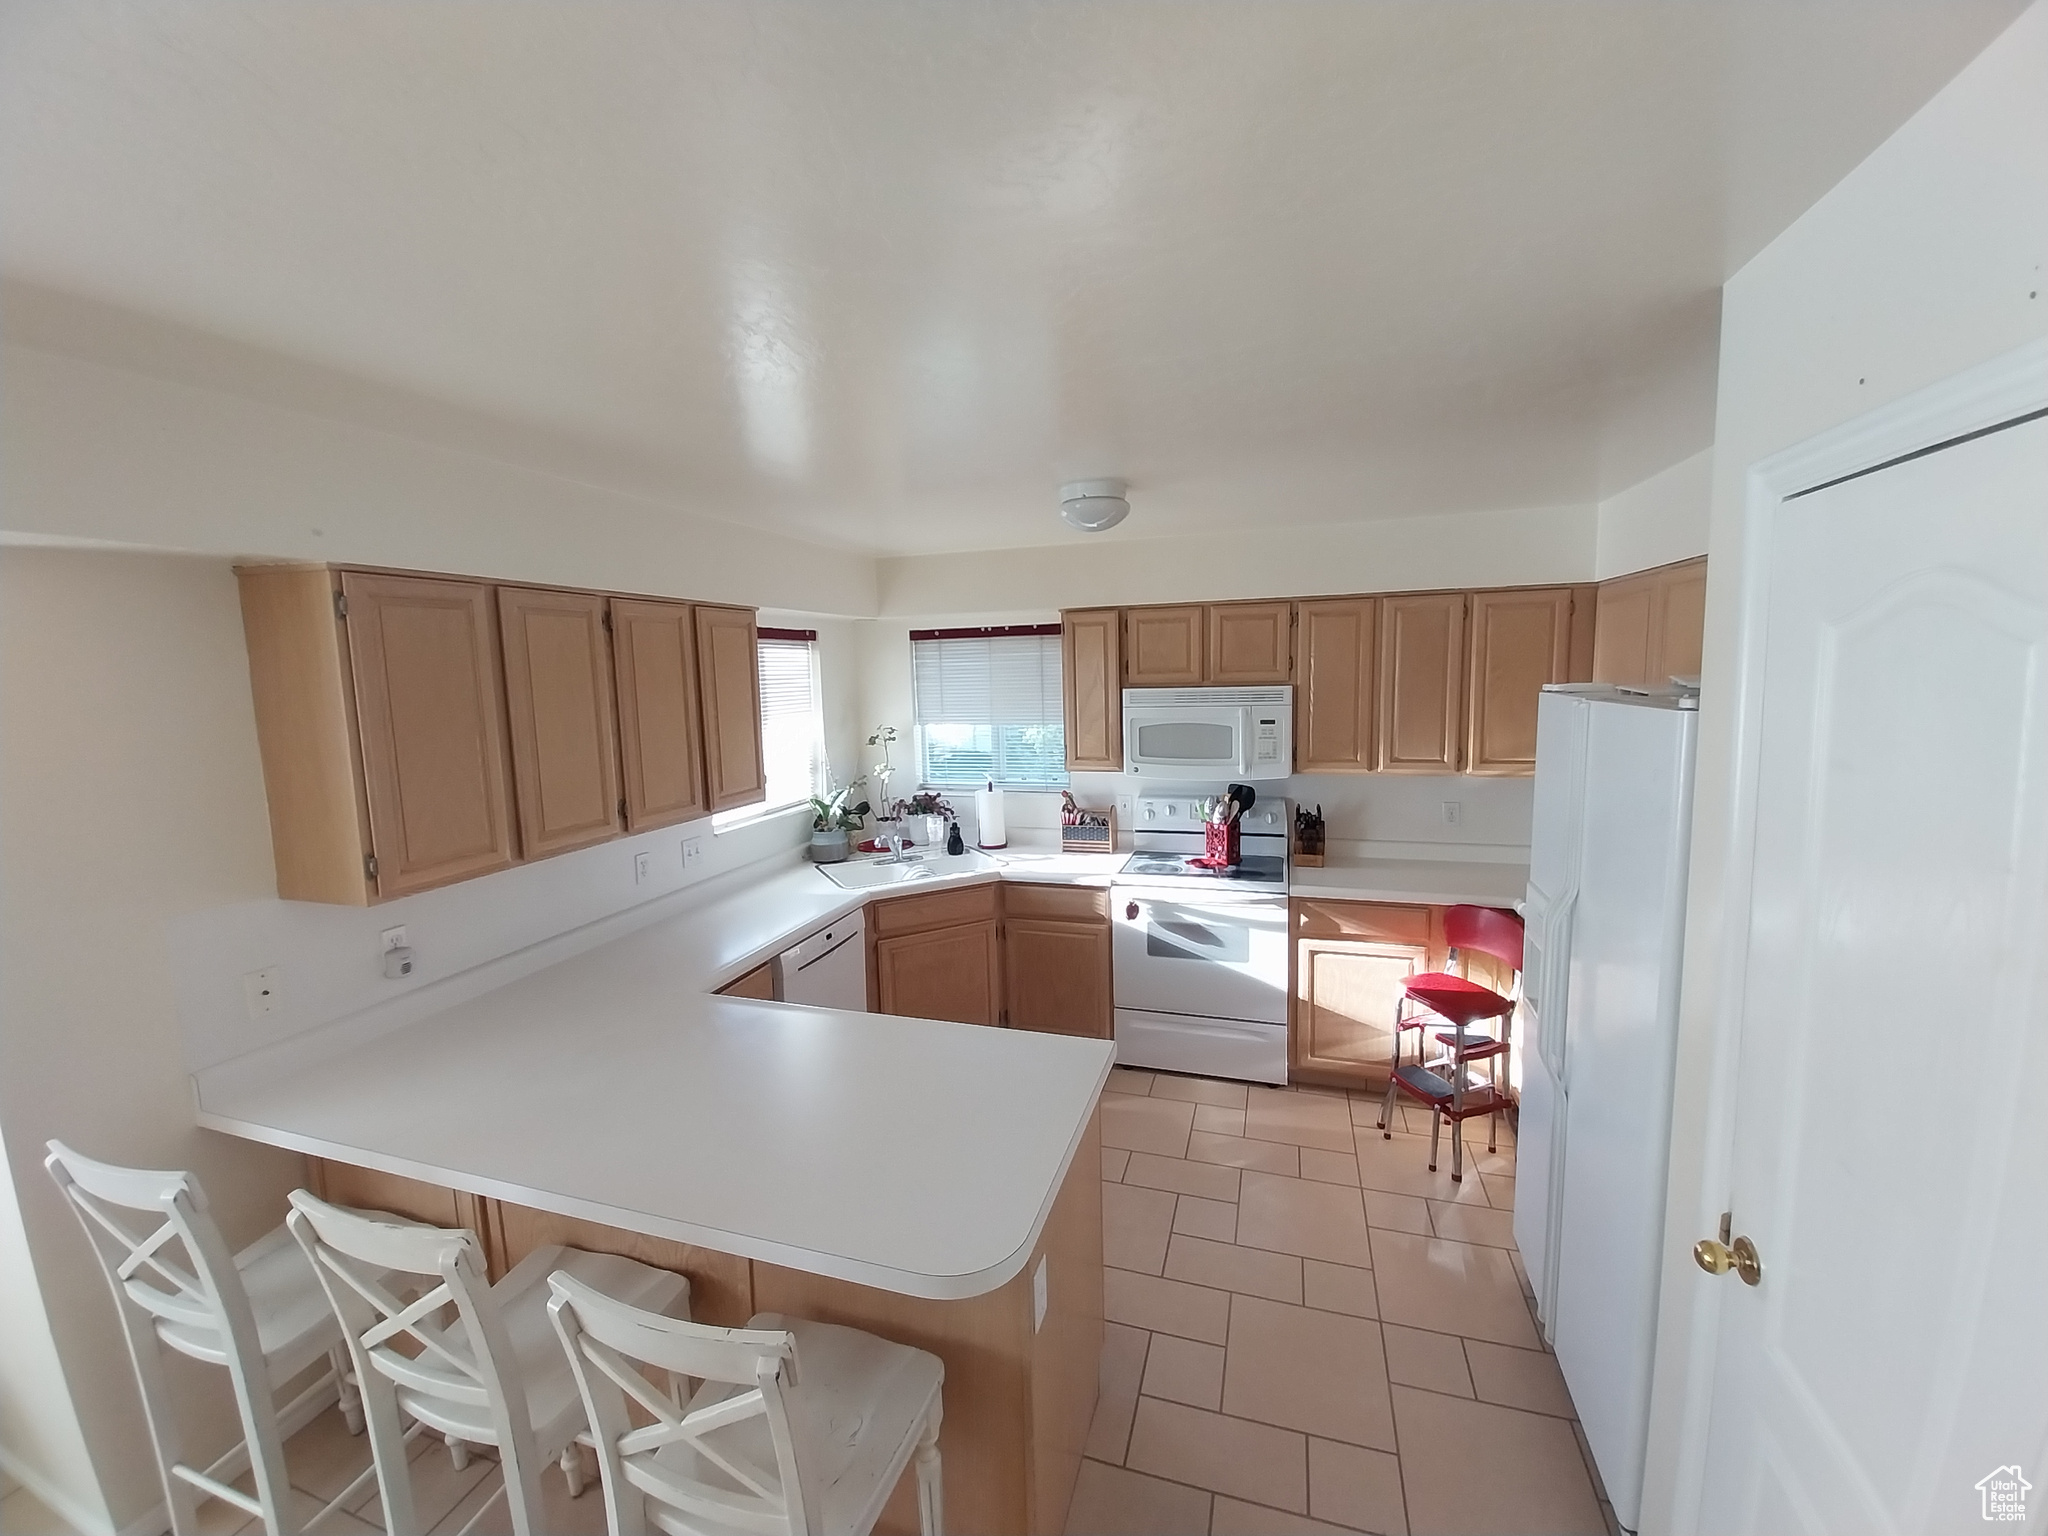 Kitchen with a kitchen breakfast bar, kitchen peninsula, white appliances, and light tile floors